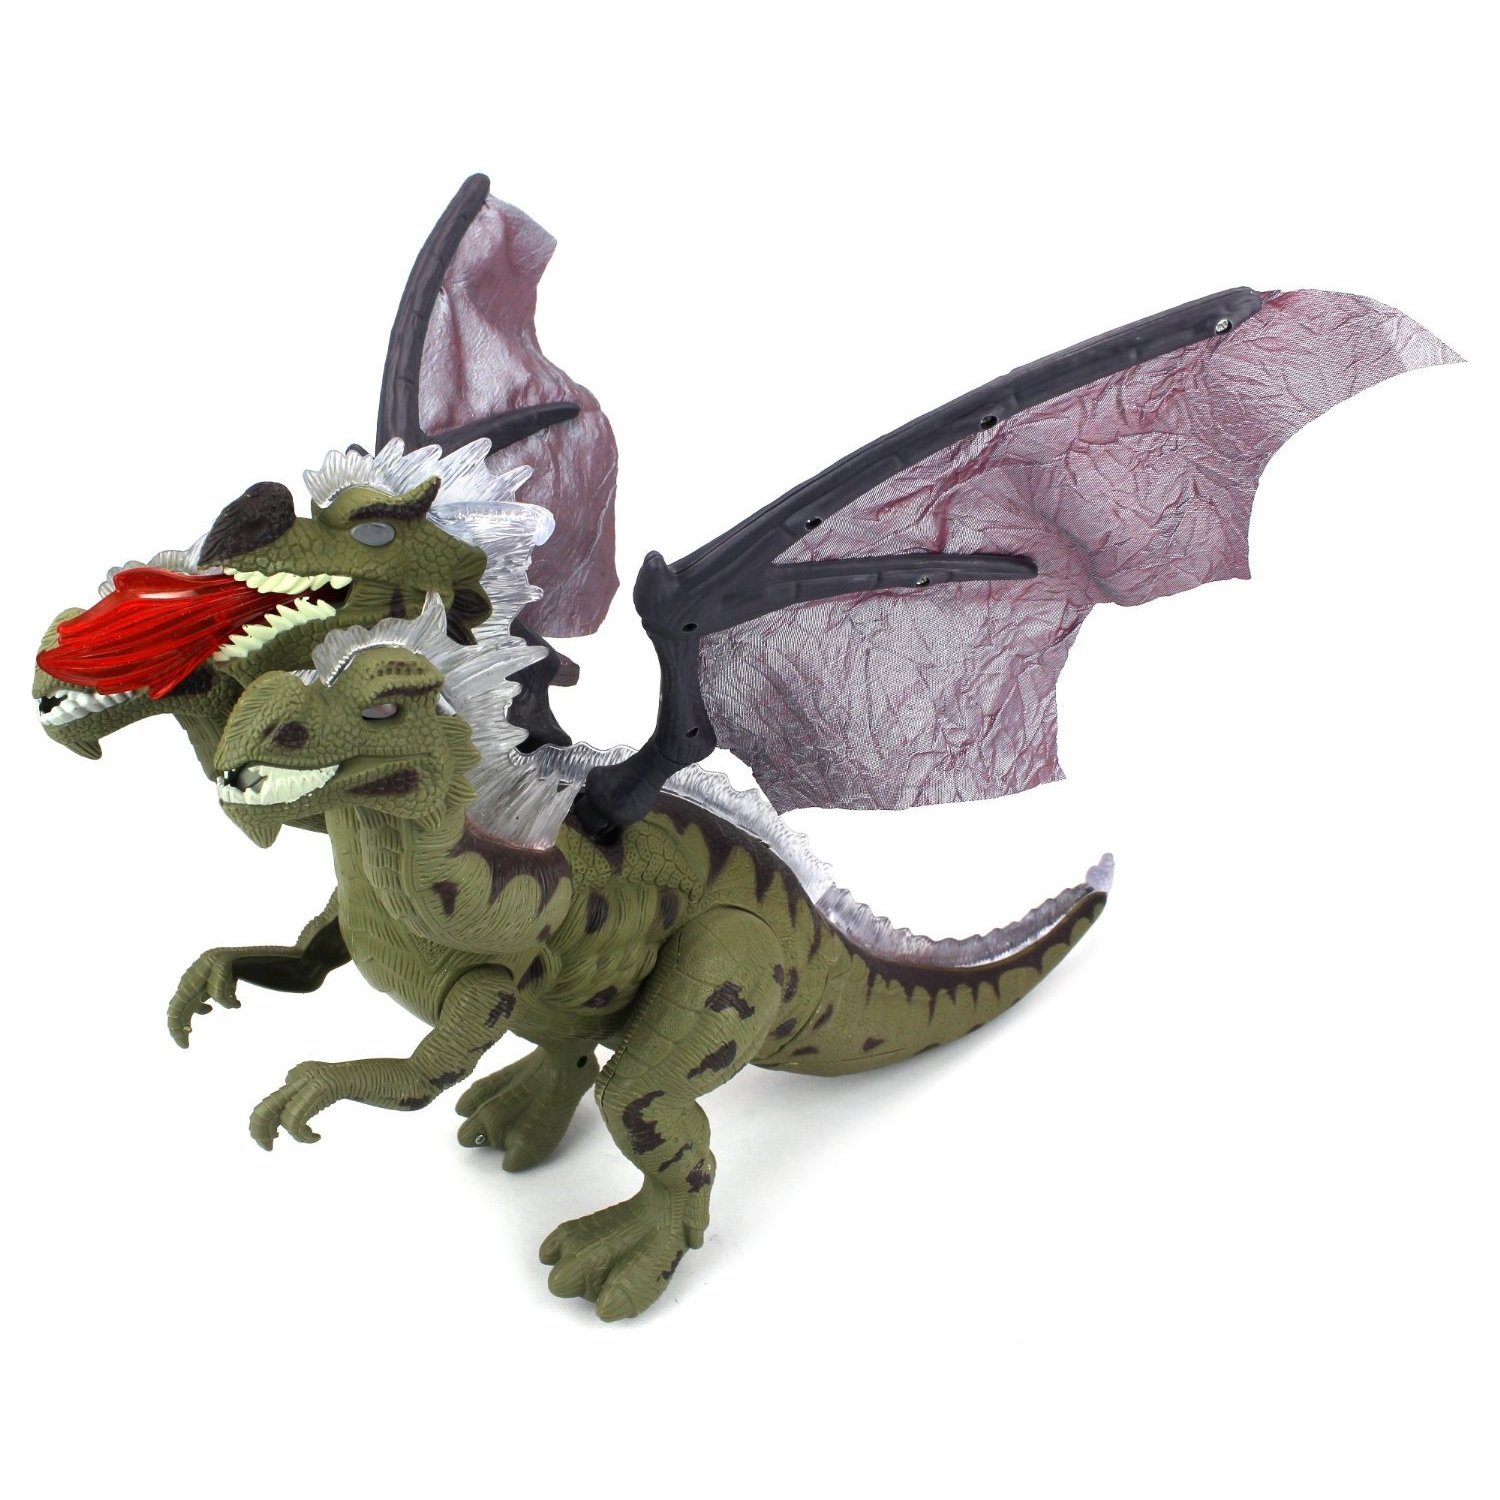 3 headed dragon toy